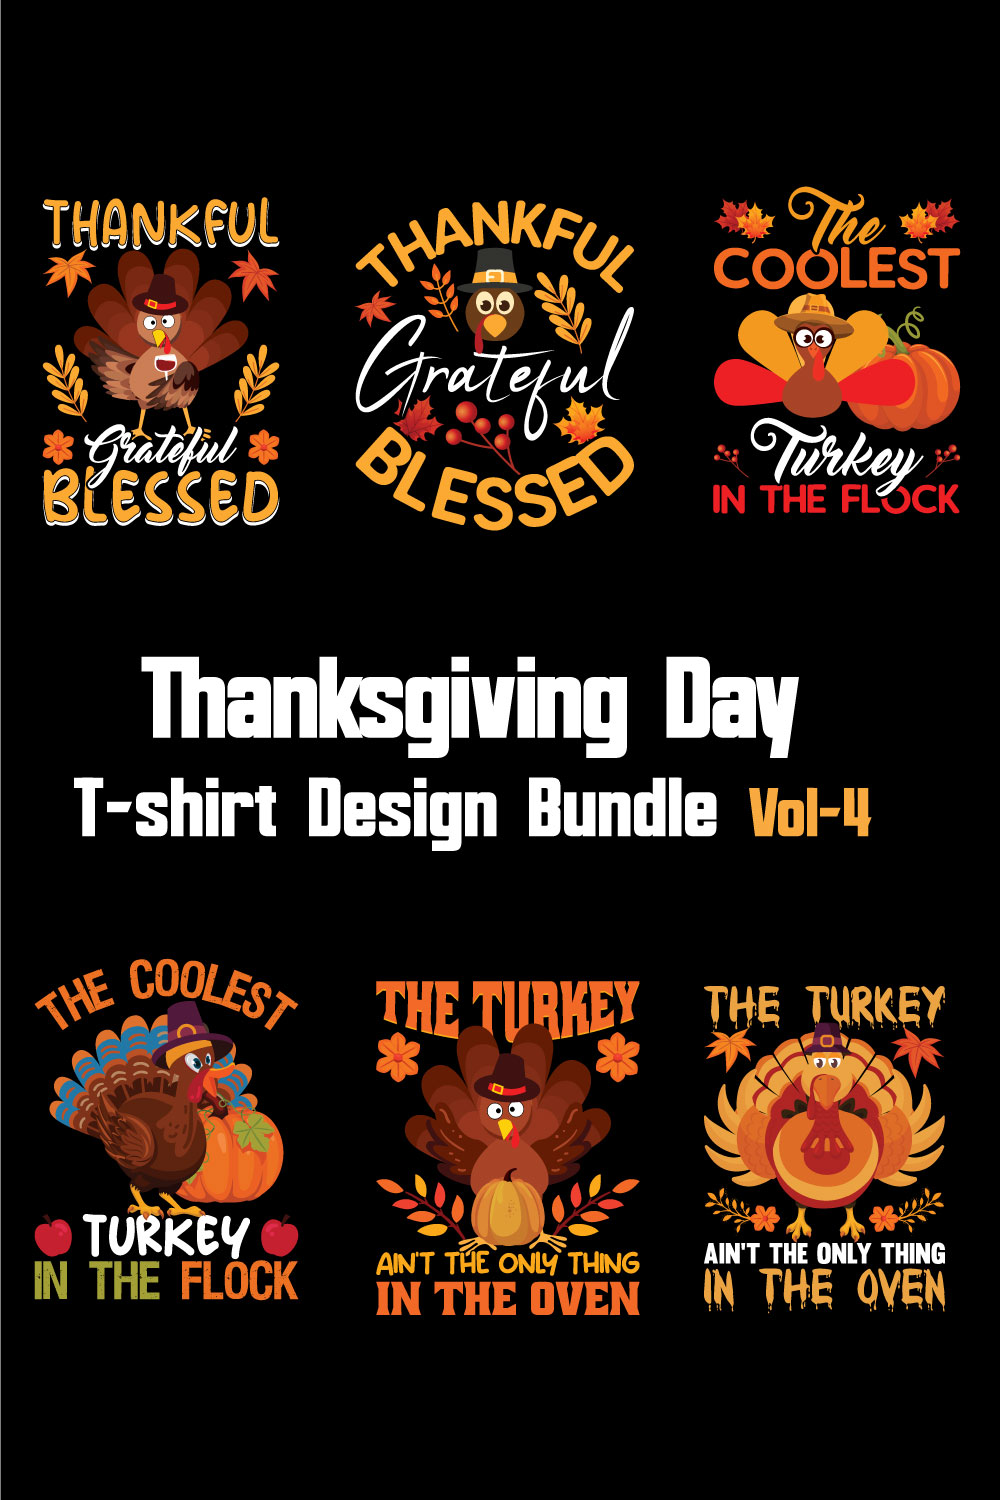 Thanksgiving Day T-shirt Design Bundle Vol-4 pinterest preview image.